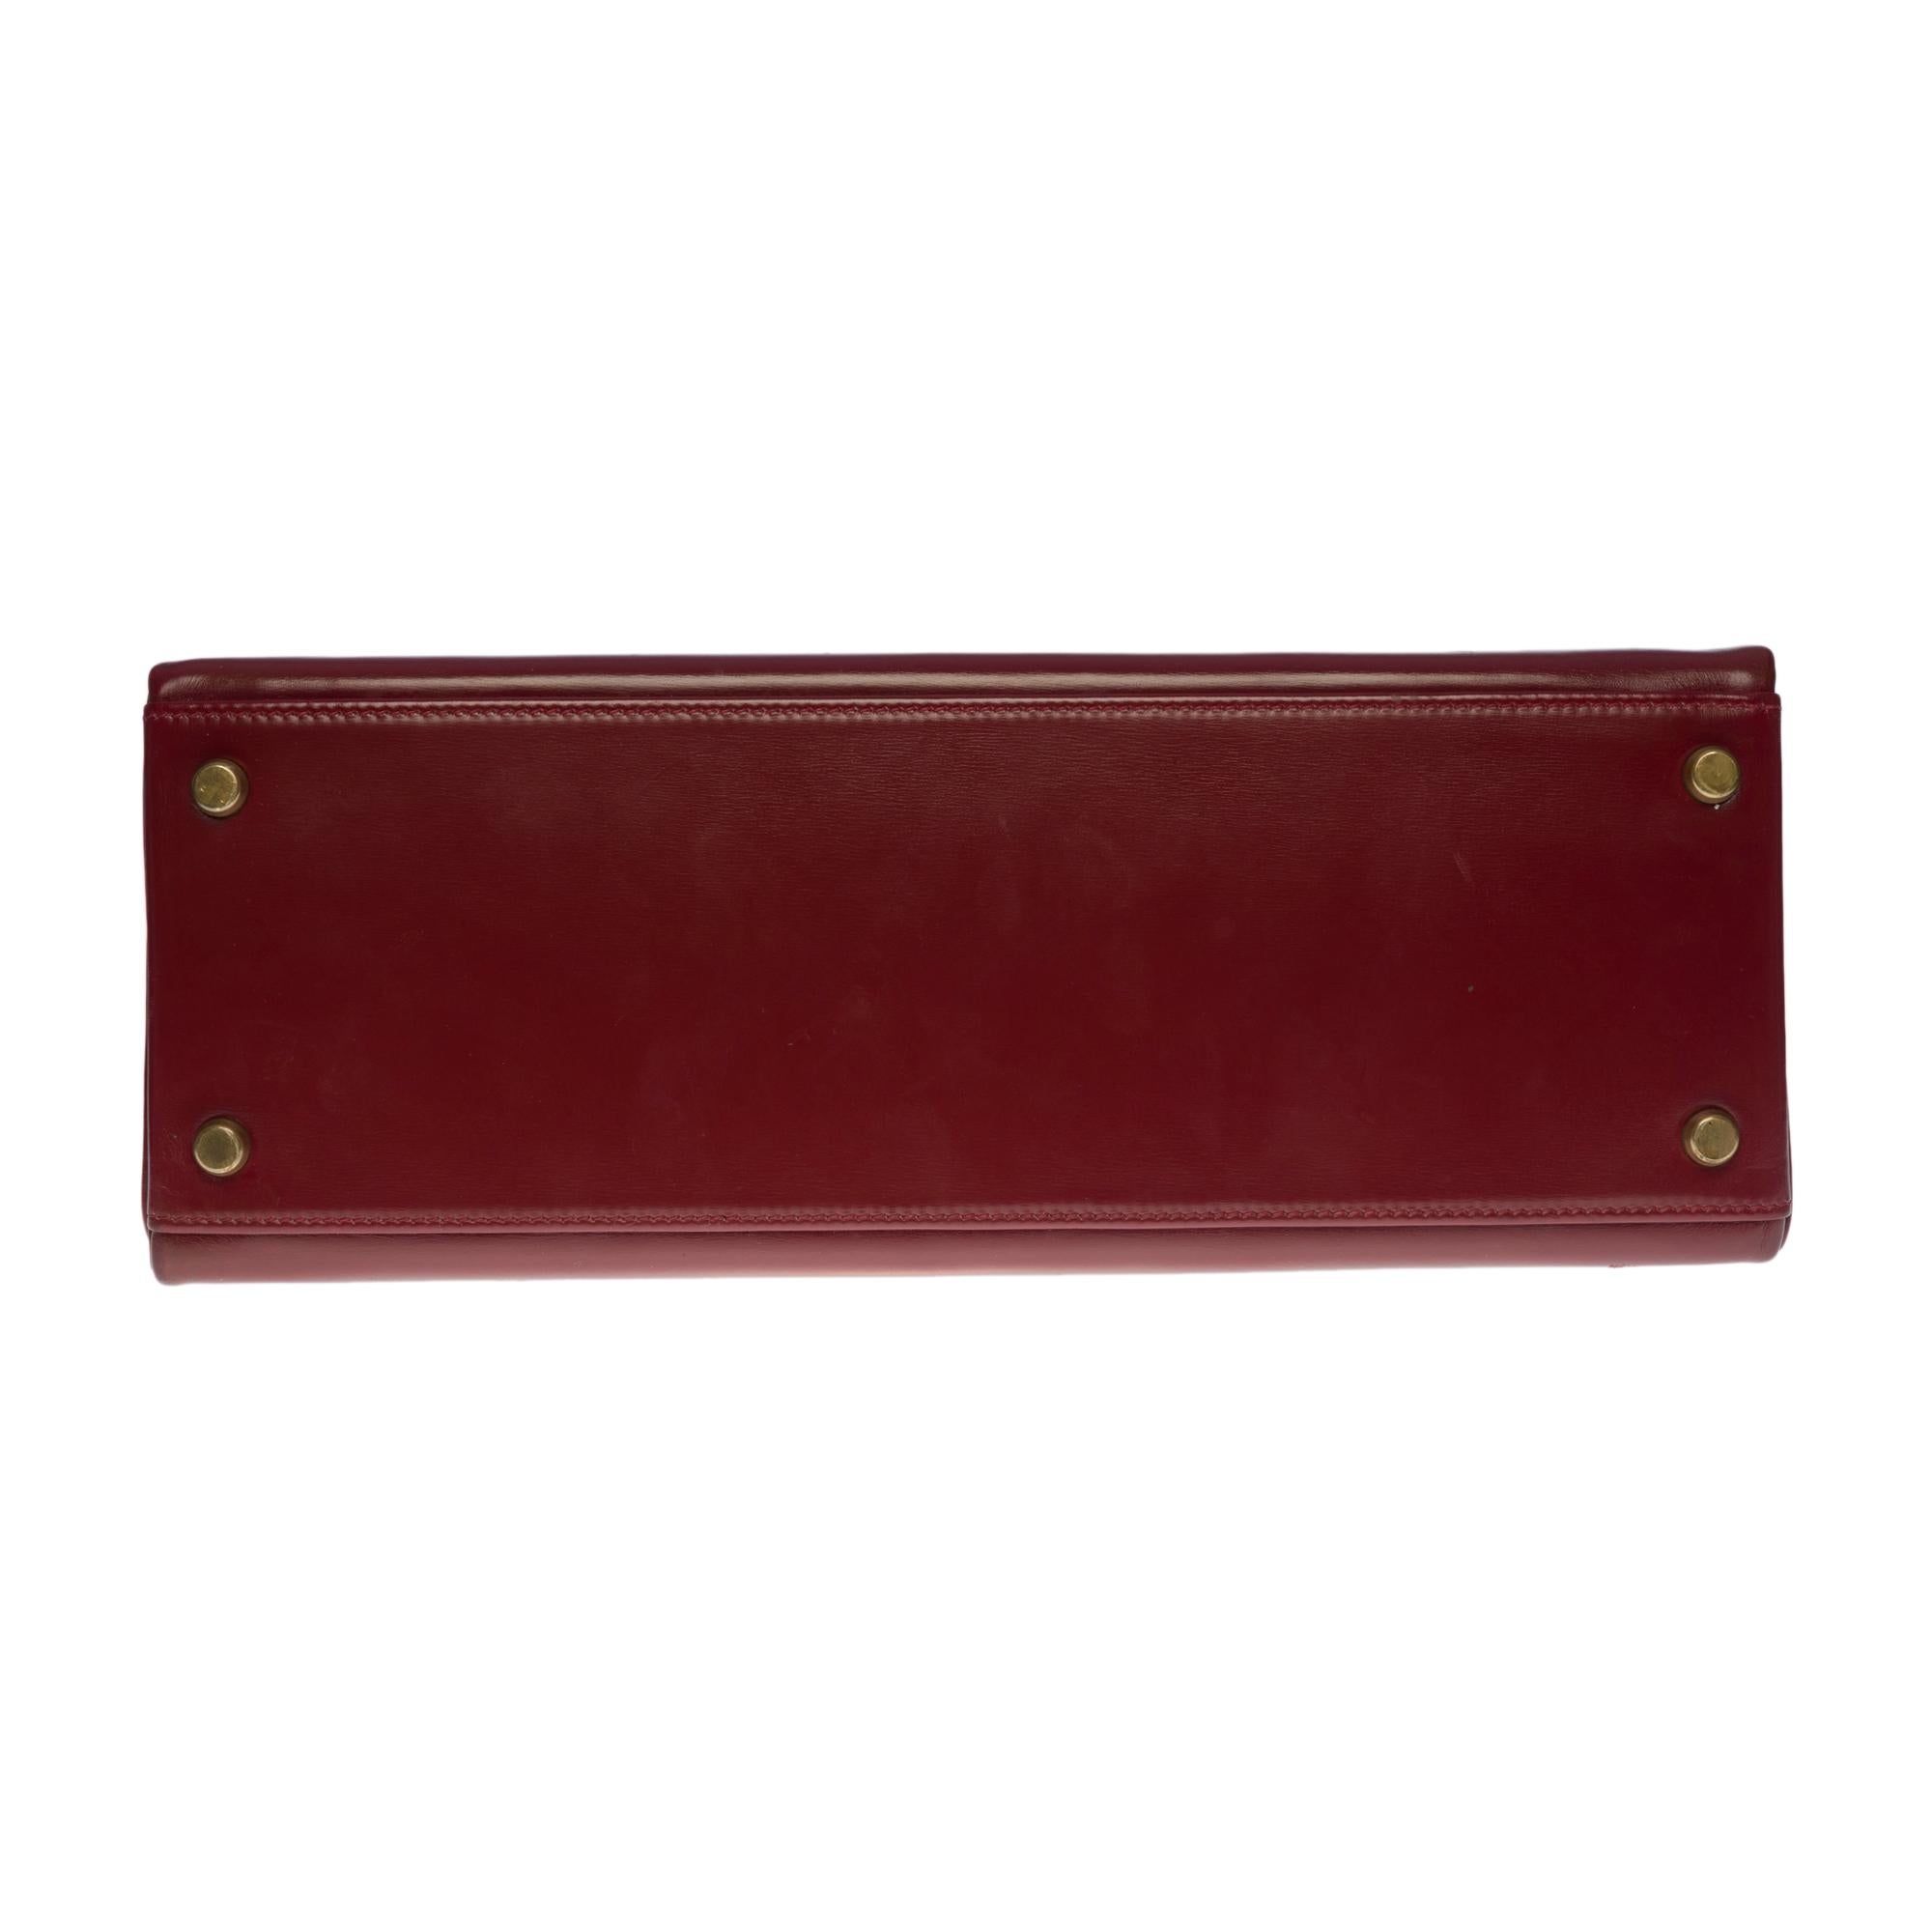 Stunning Hermès Kelly 32 handbag in Burgundy Calf box leather, GHW 2